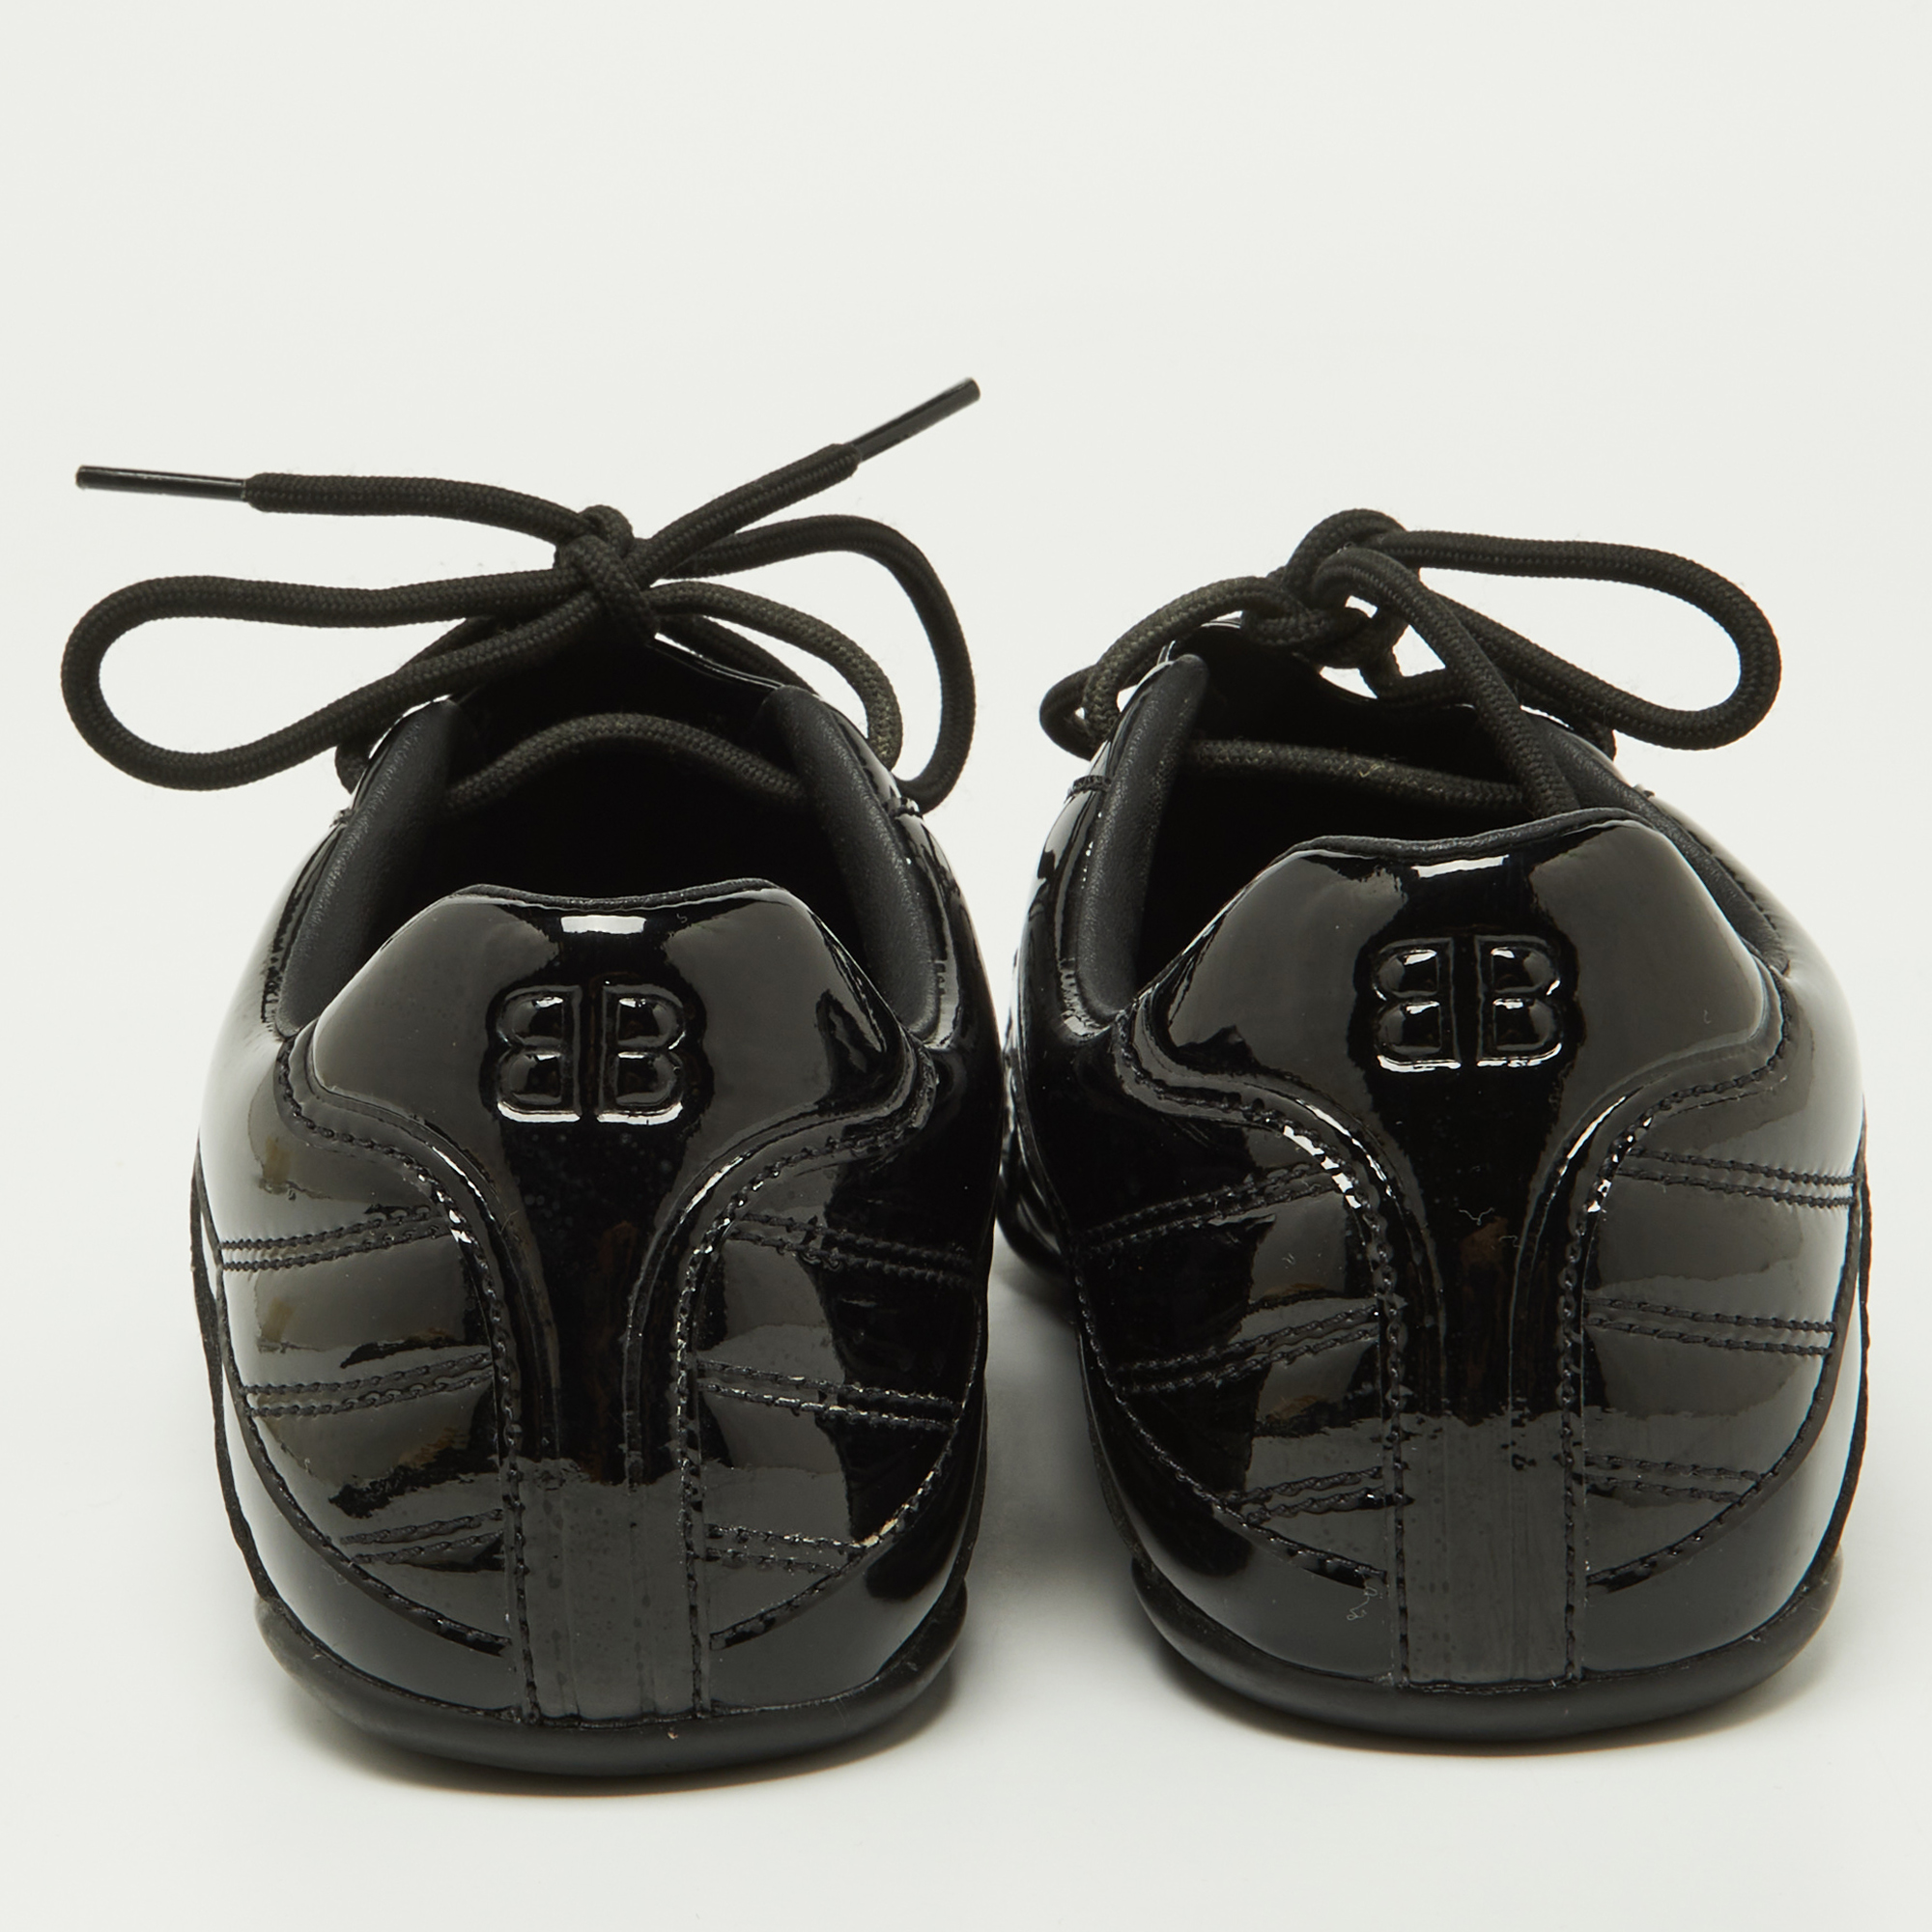 Balenciaga Black Patent Leather Sneakers Size 39